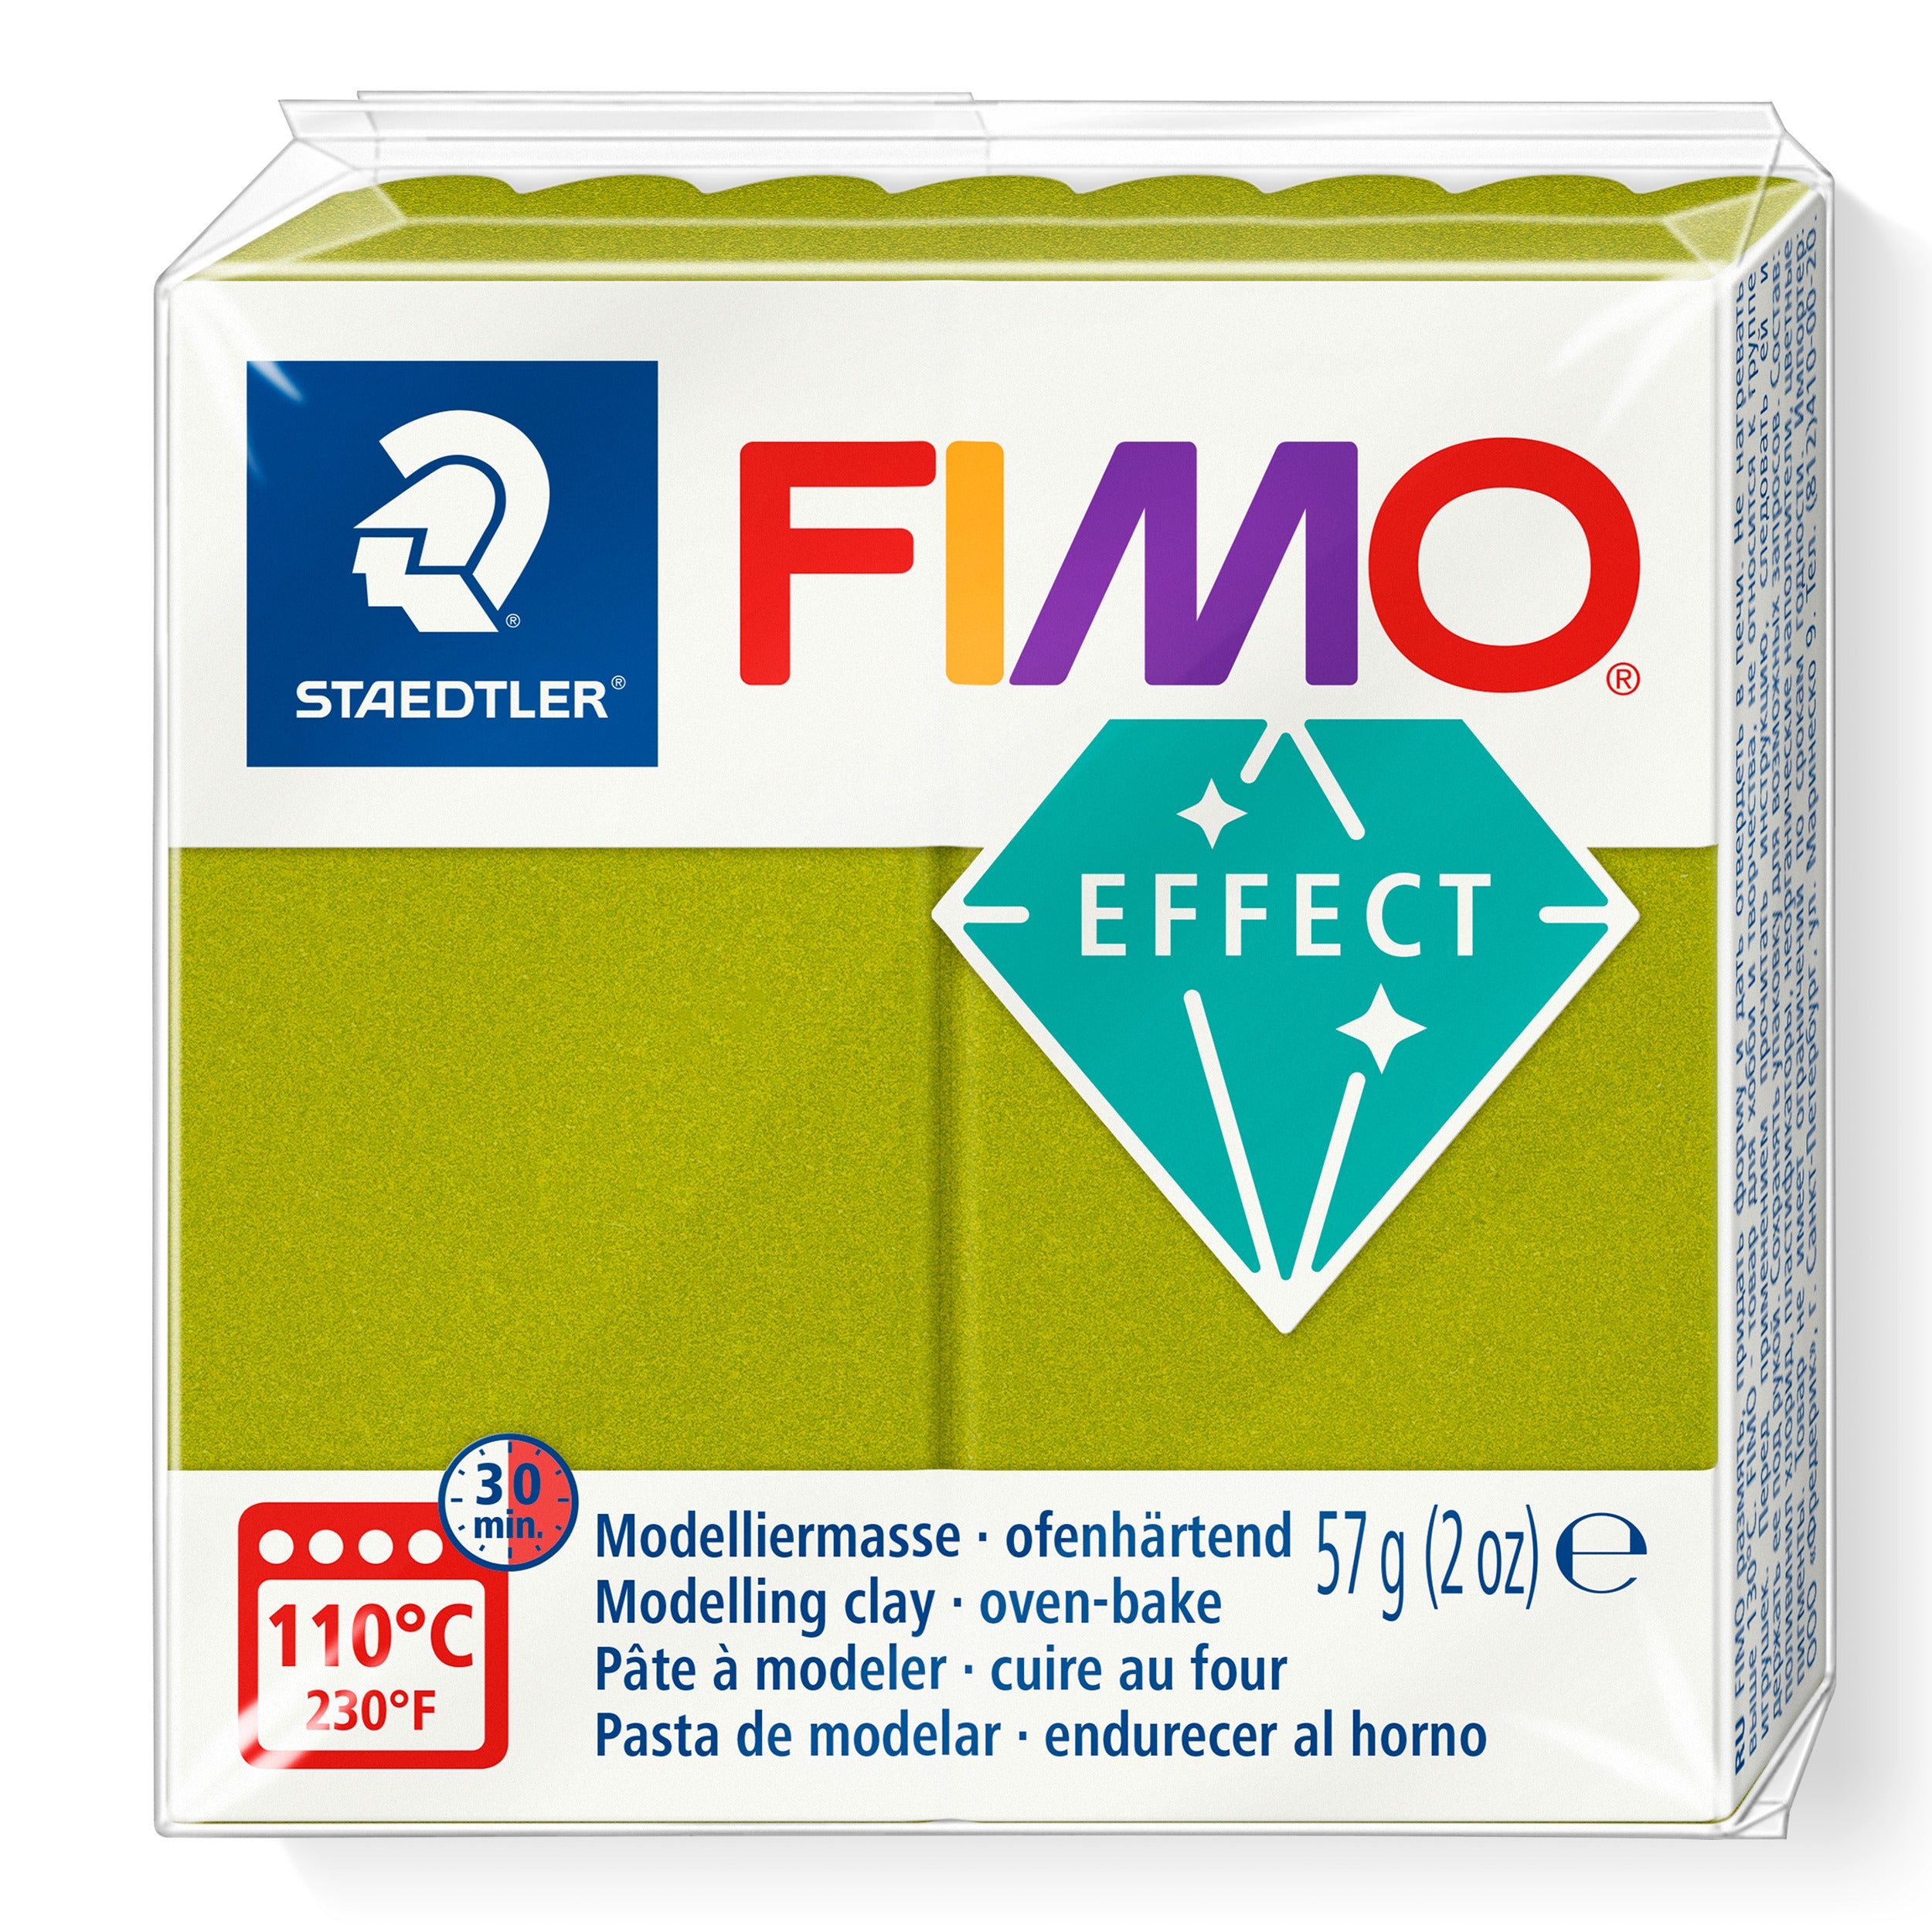 NEW Metallic Green FIMO Effect polymer Clay 57g 8010-51